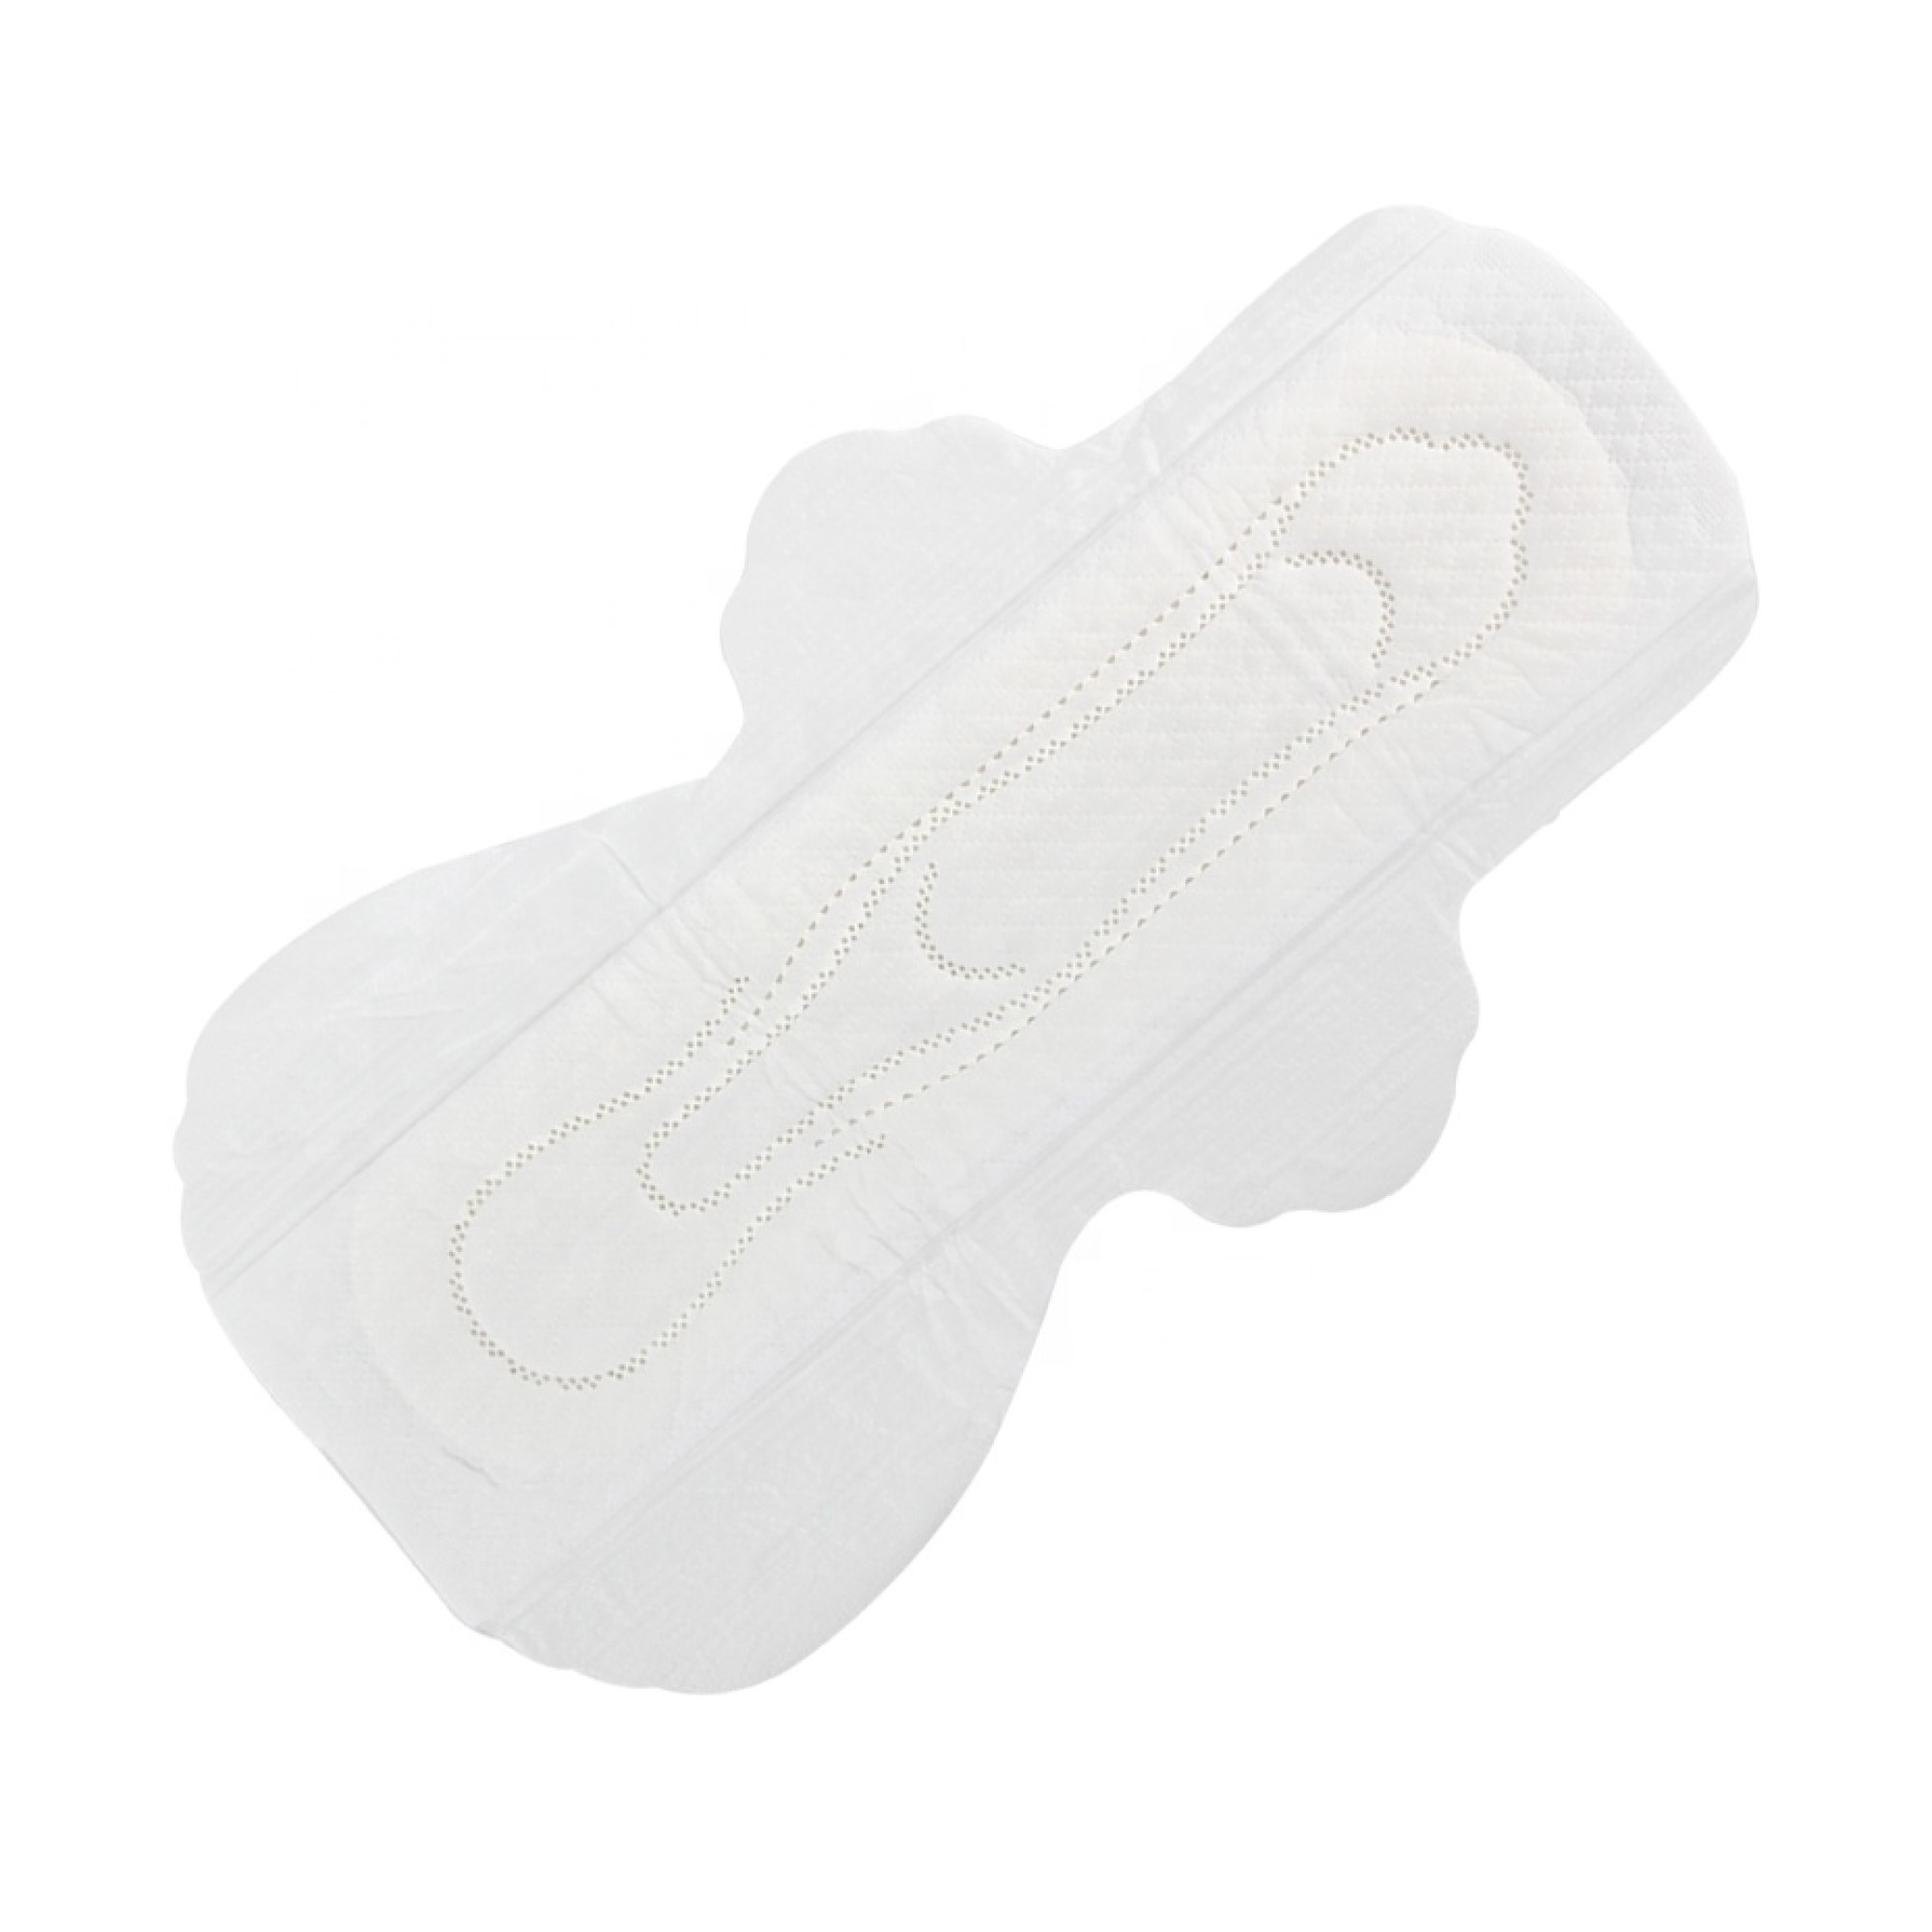 Moosee New disposable sanitary pads company-1